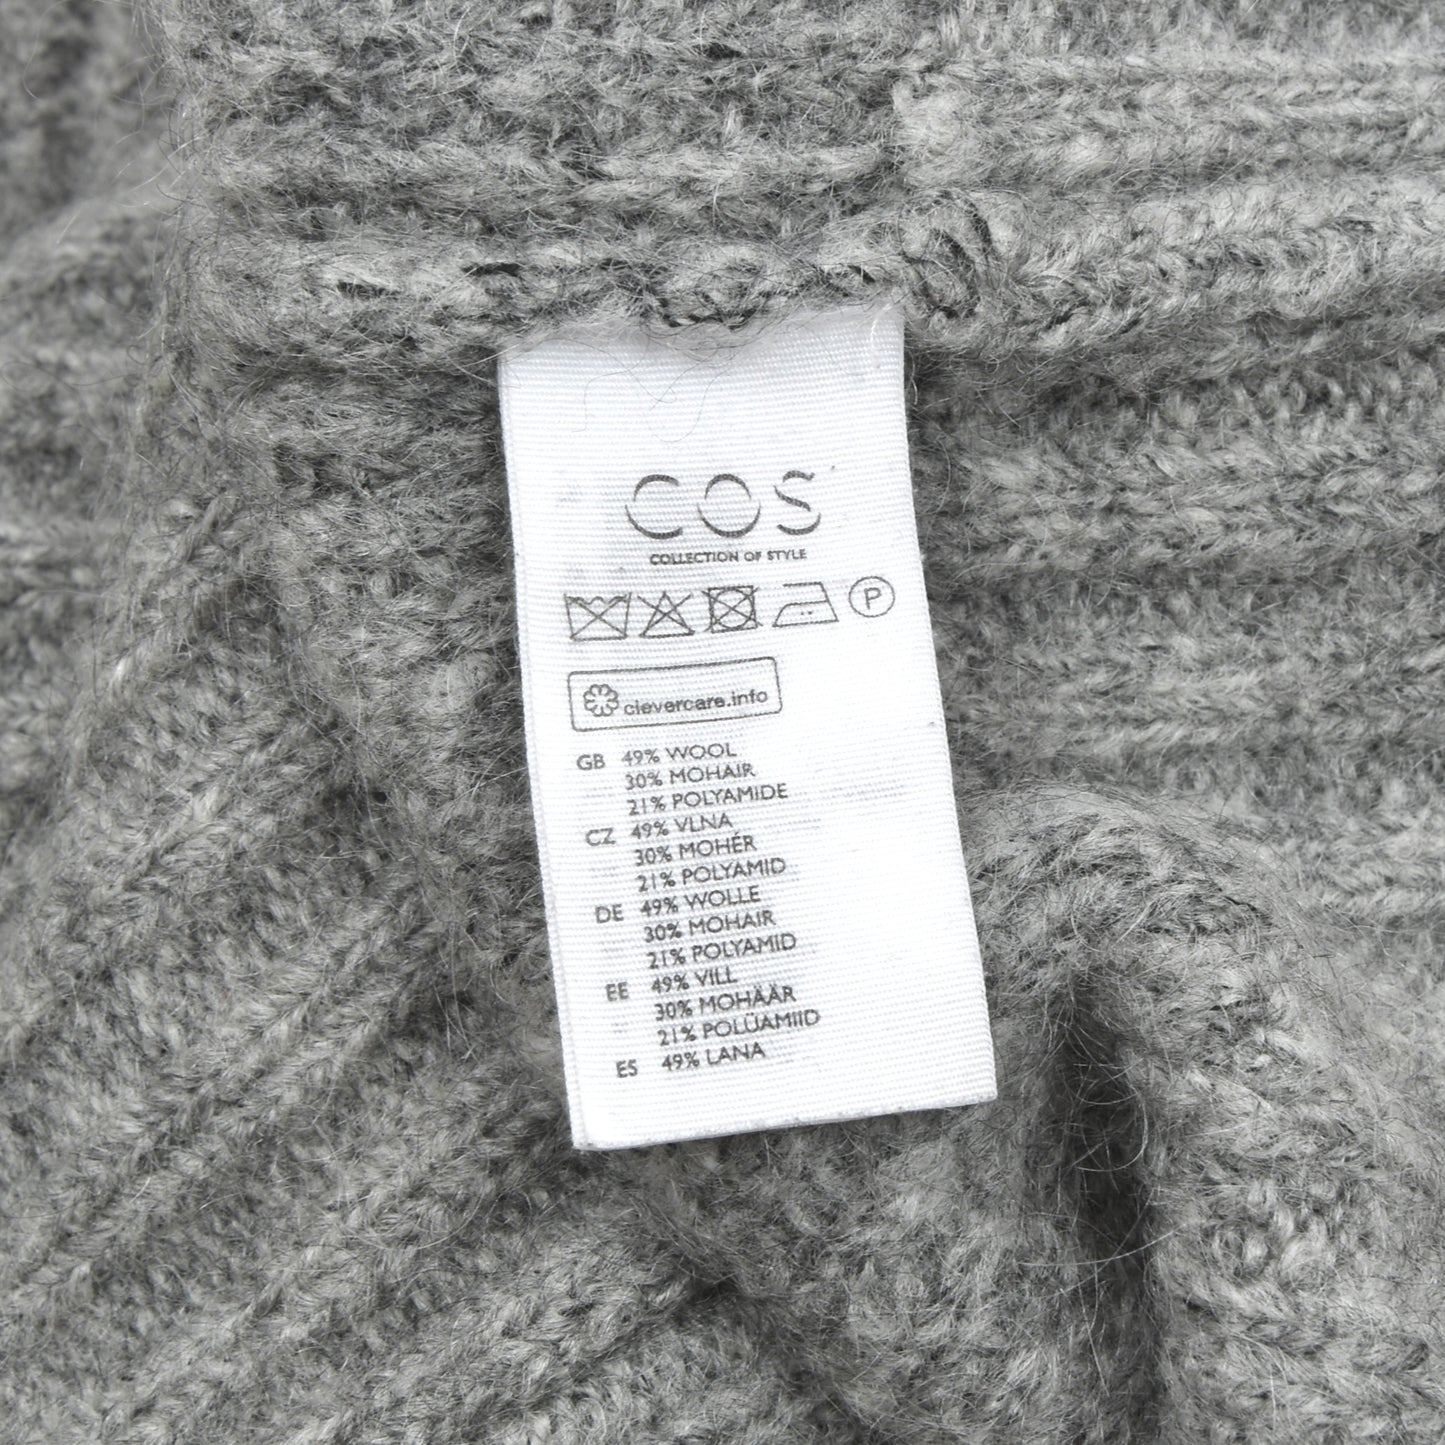 COS Sweater Wolle-Angora-Mix Größe S - Grau